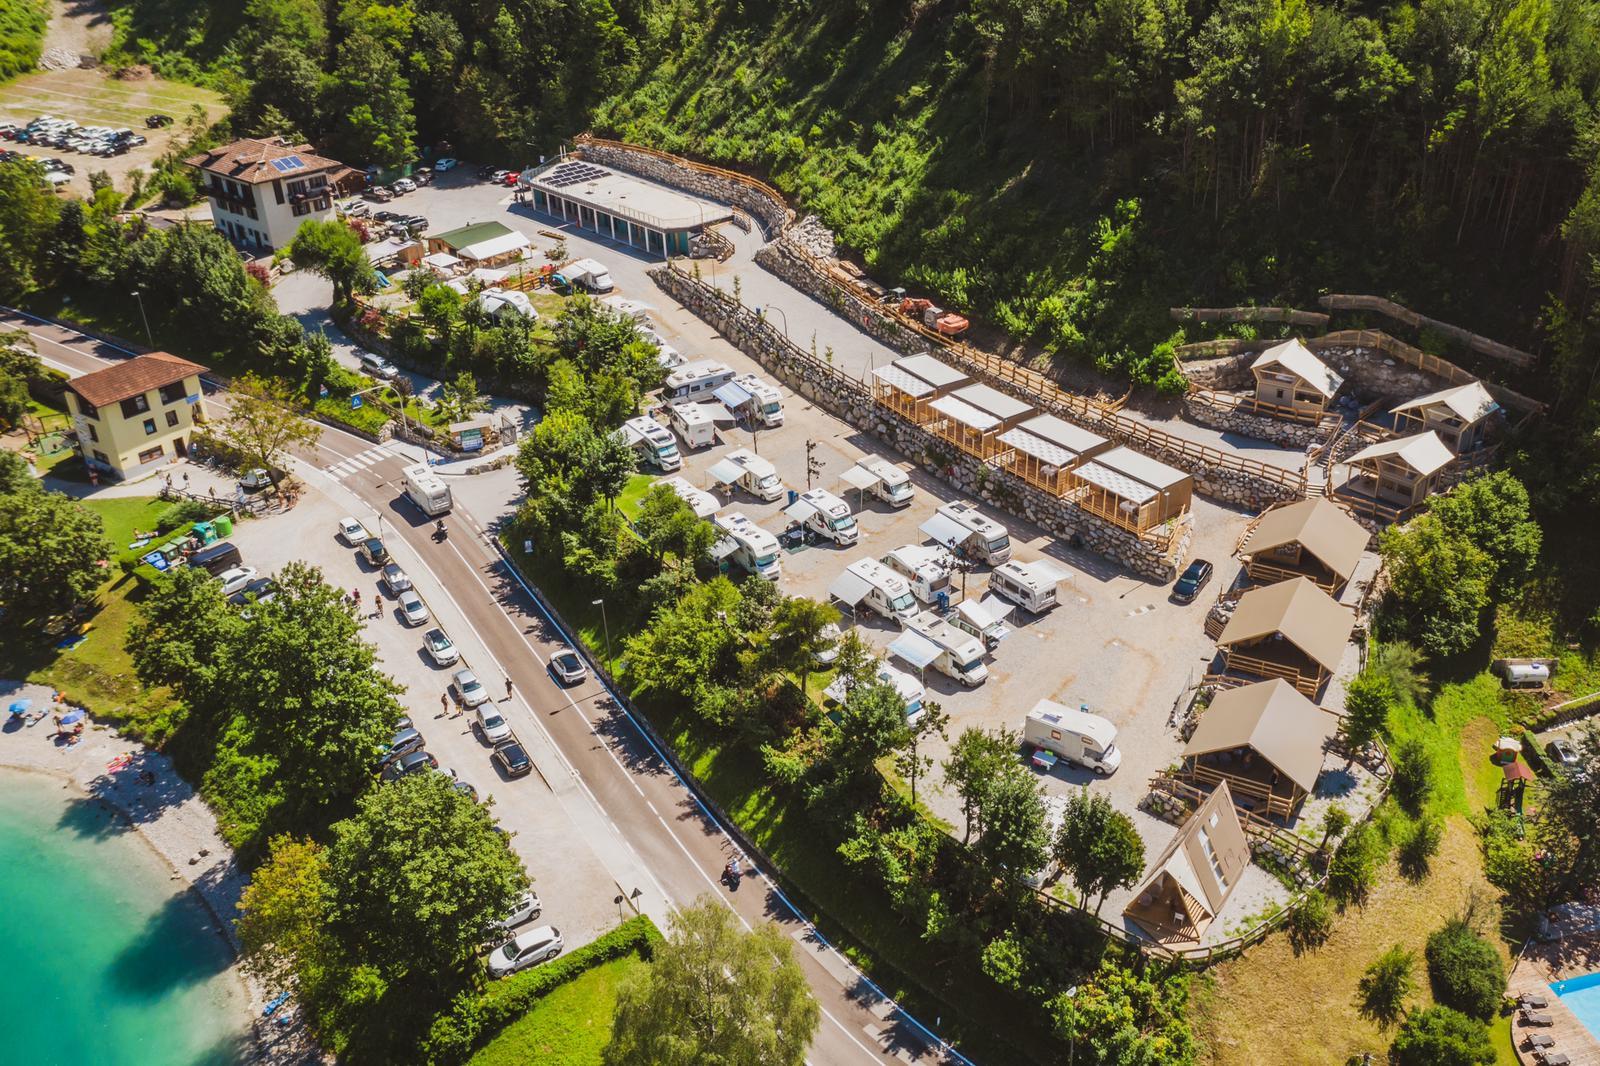 The best campsites in the Garda Trentino region – image 8